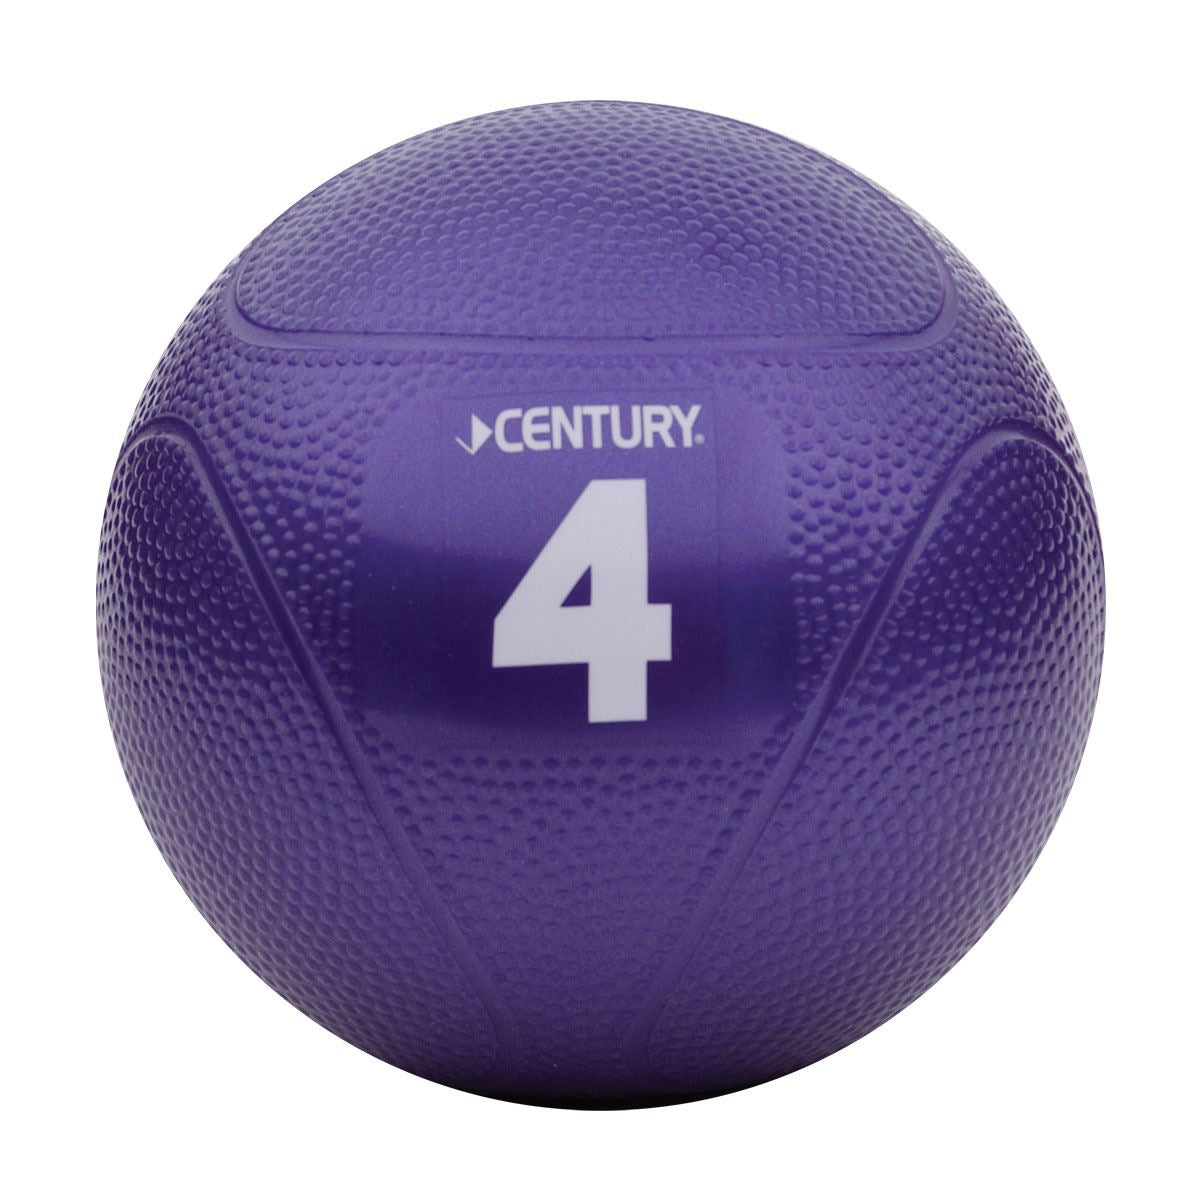 Century Medizinball 4lb/1,8kg, 2494700804